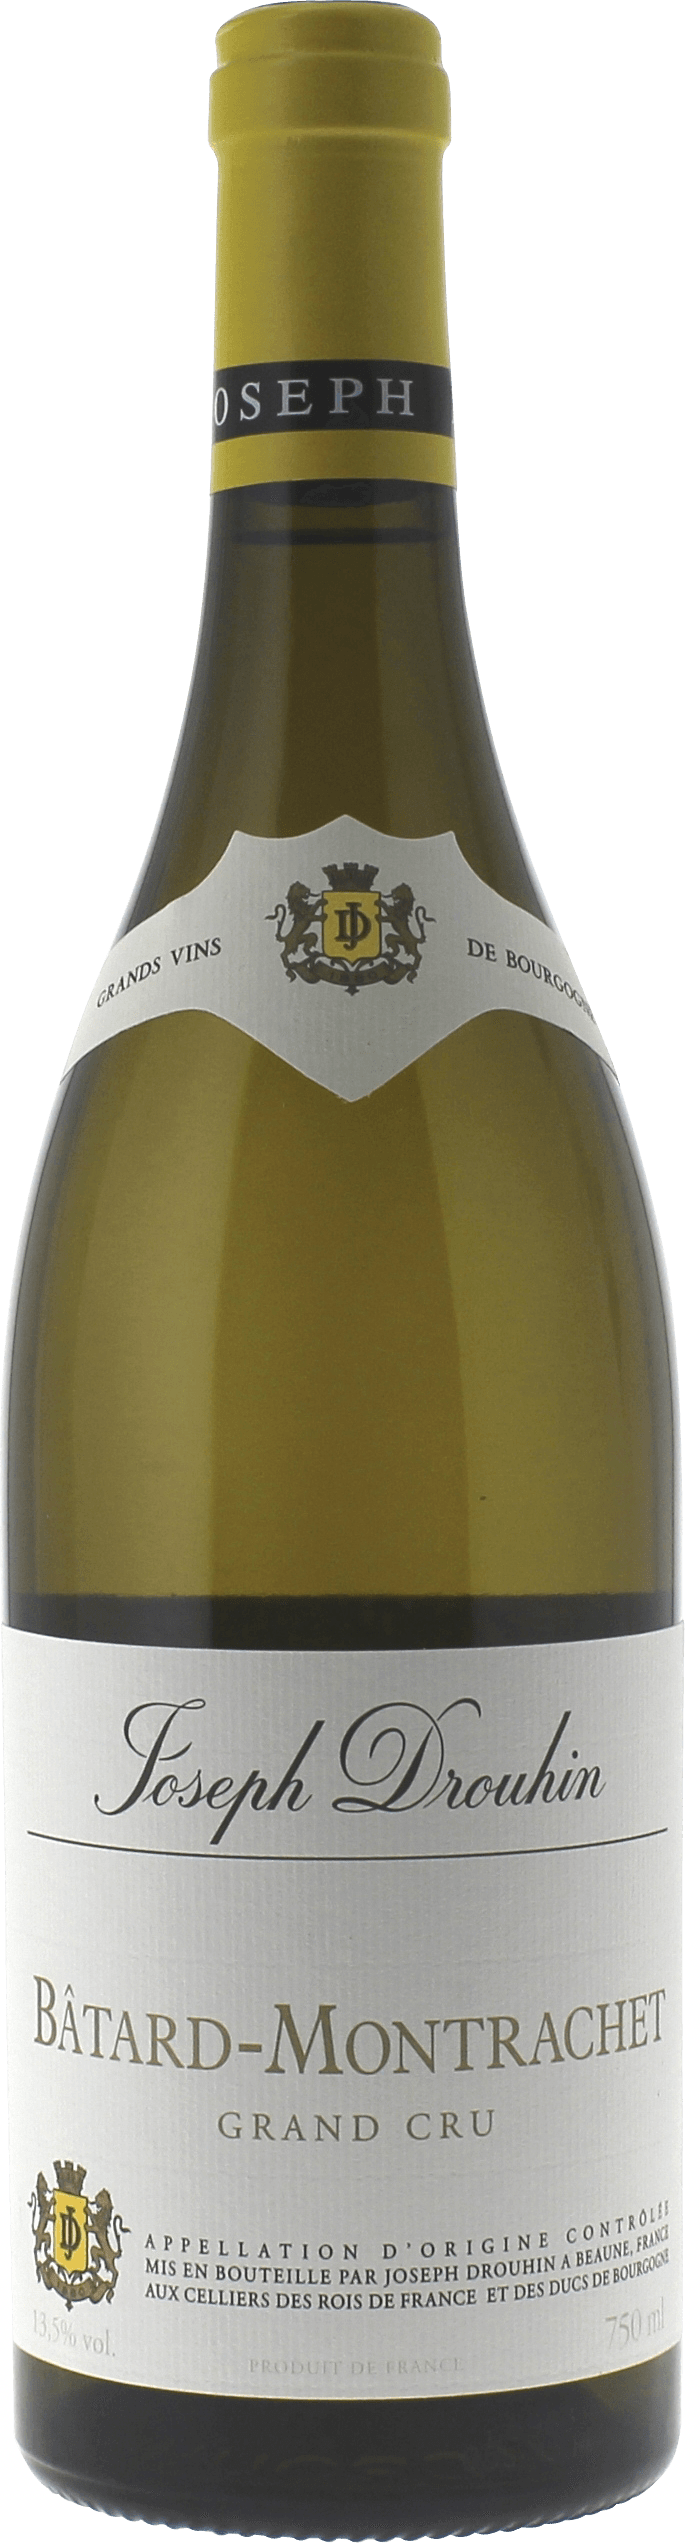 Batard montrachet grand cru 2015 Domaine Joseph DROUHIN, Bourgogne blanc